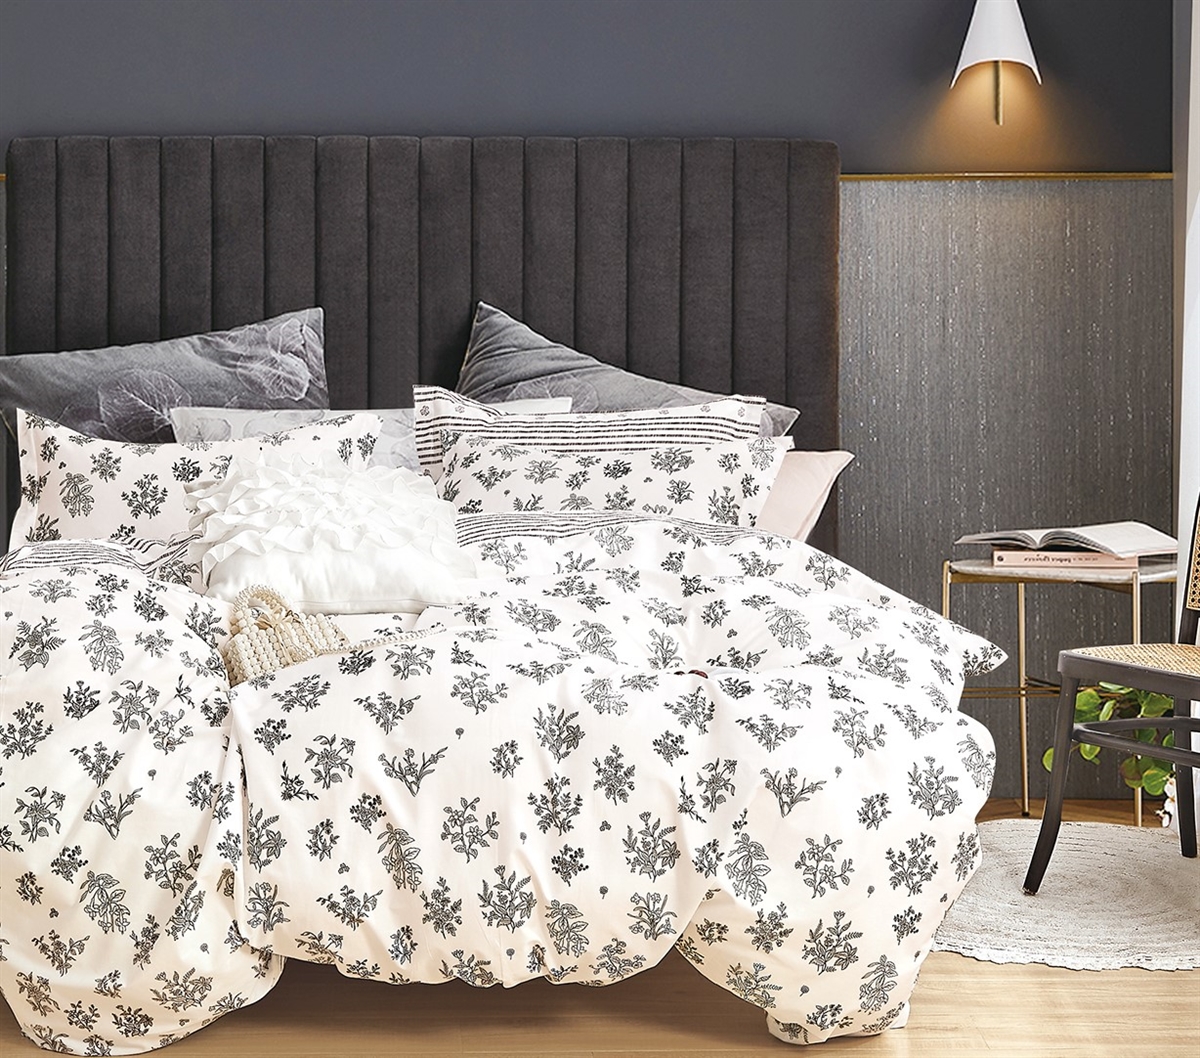 Parsley Black/White Floral 100% Cotton Reversible Comforter Set